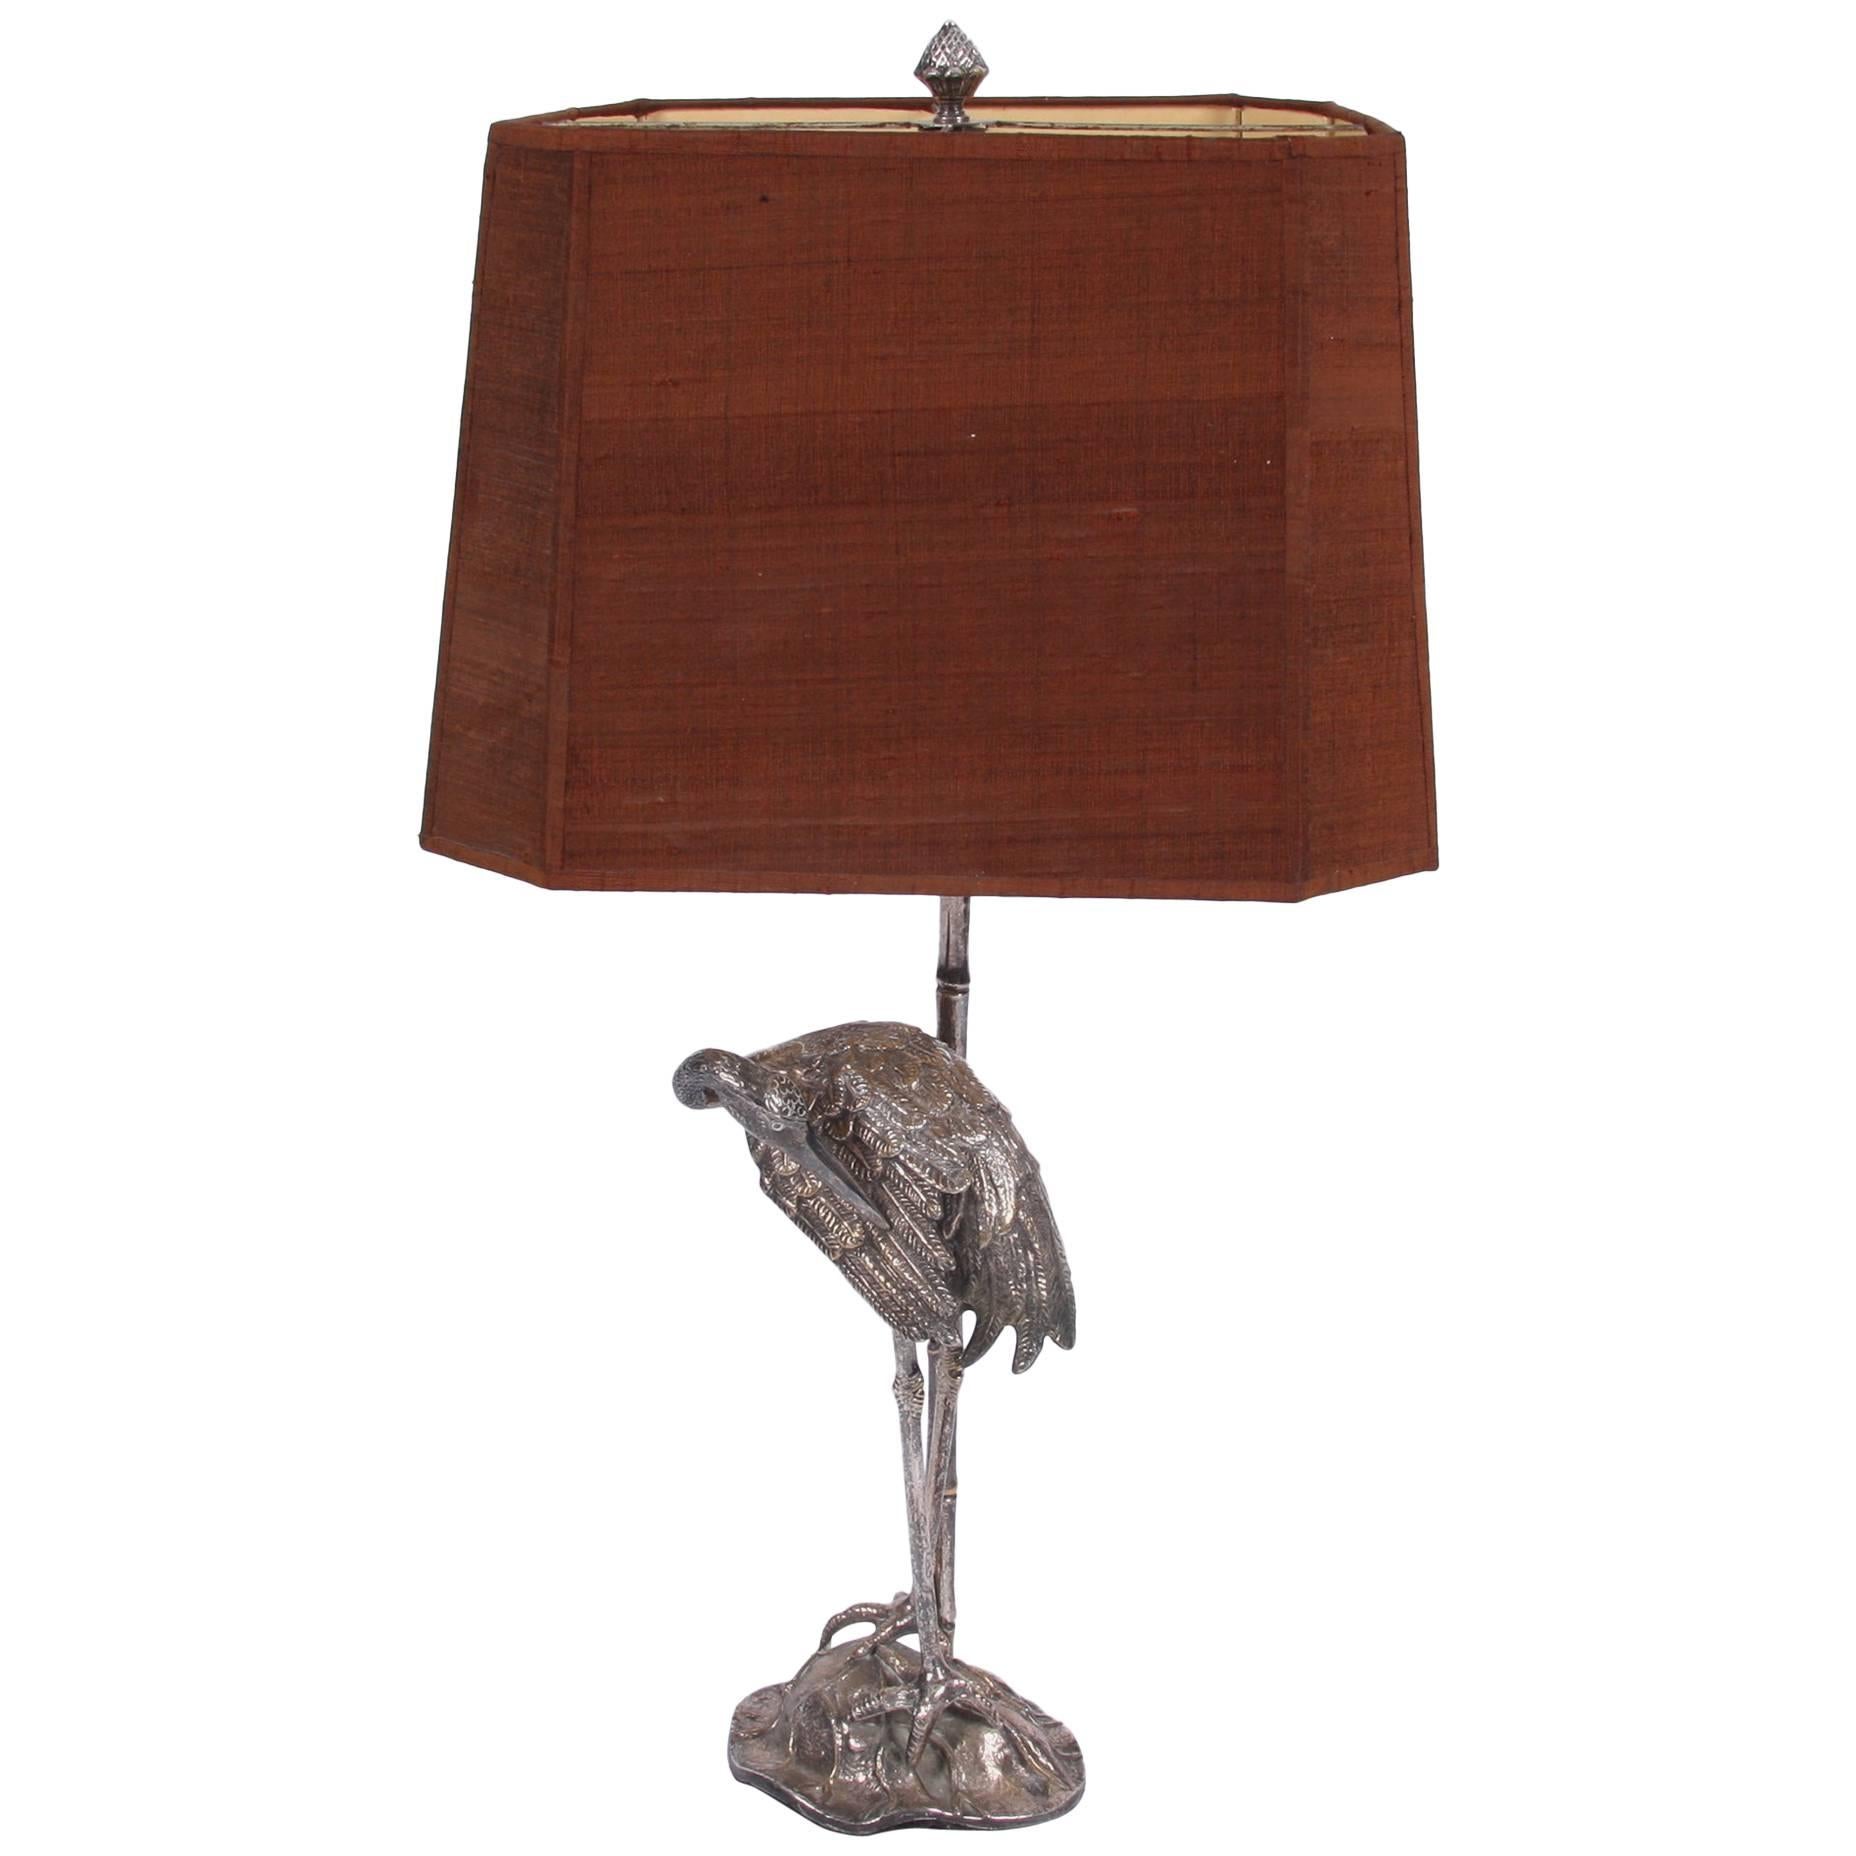 Spanish Stork Table Lamp